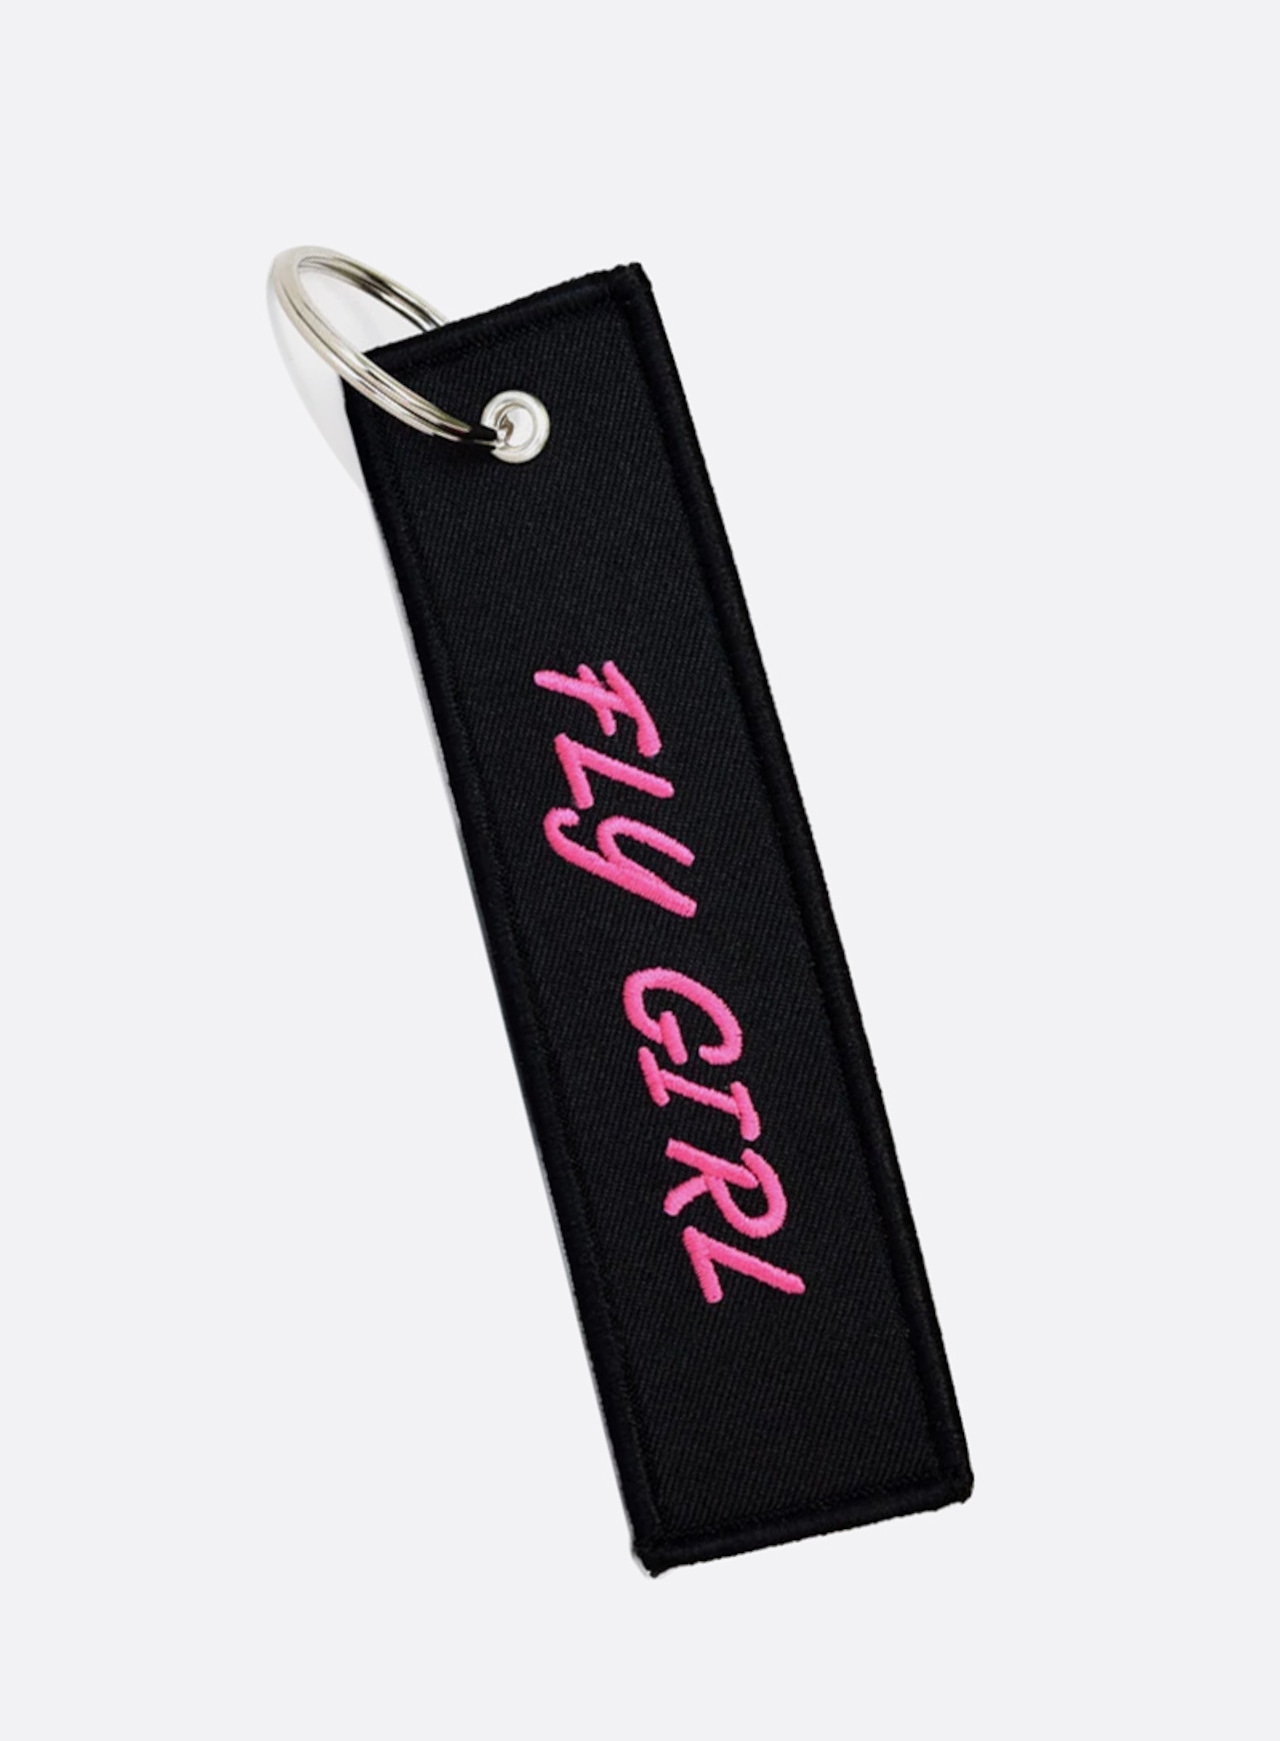 Bag Tag Keychain「Fly Girl」